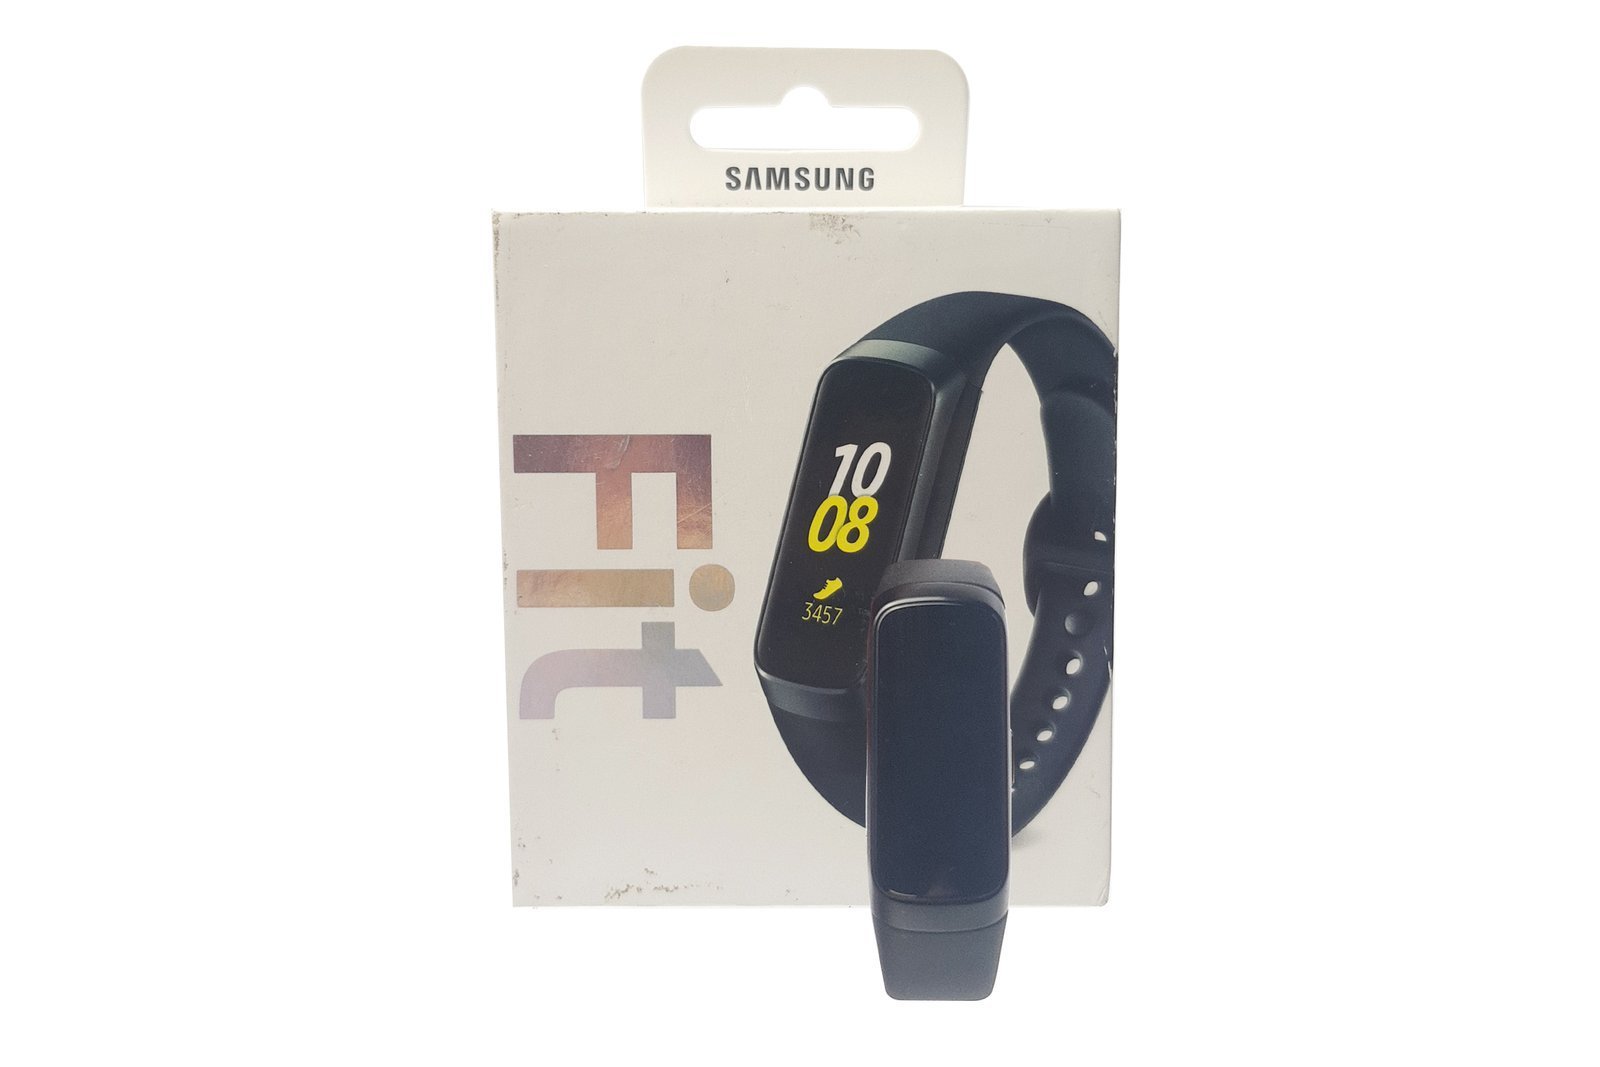 Samsung Galaxy Fit SM-R370 Smart Fitness Watch Smartwatch Black